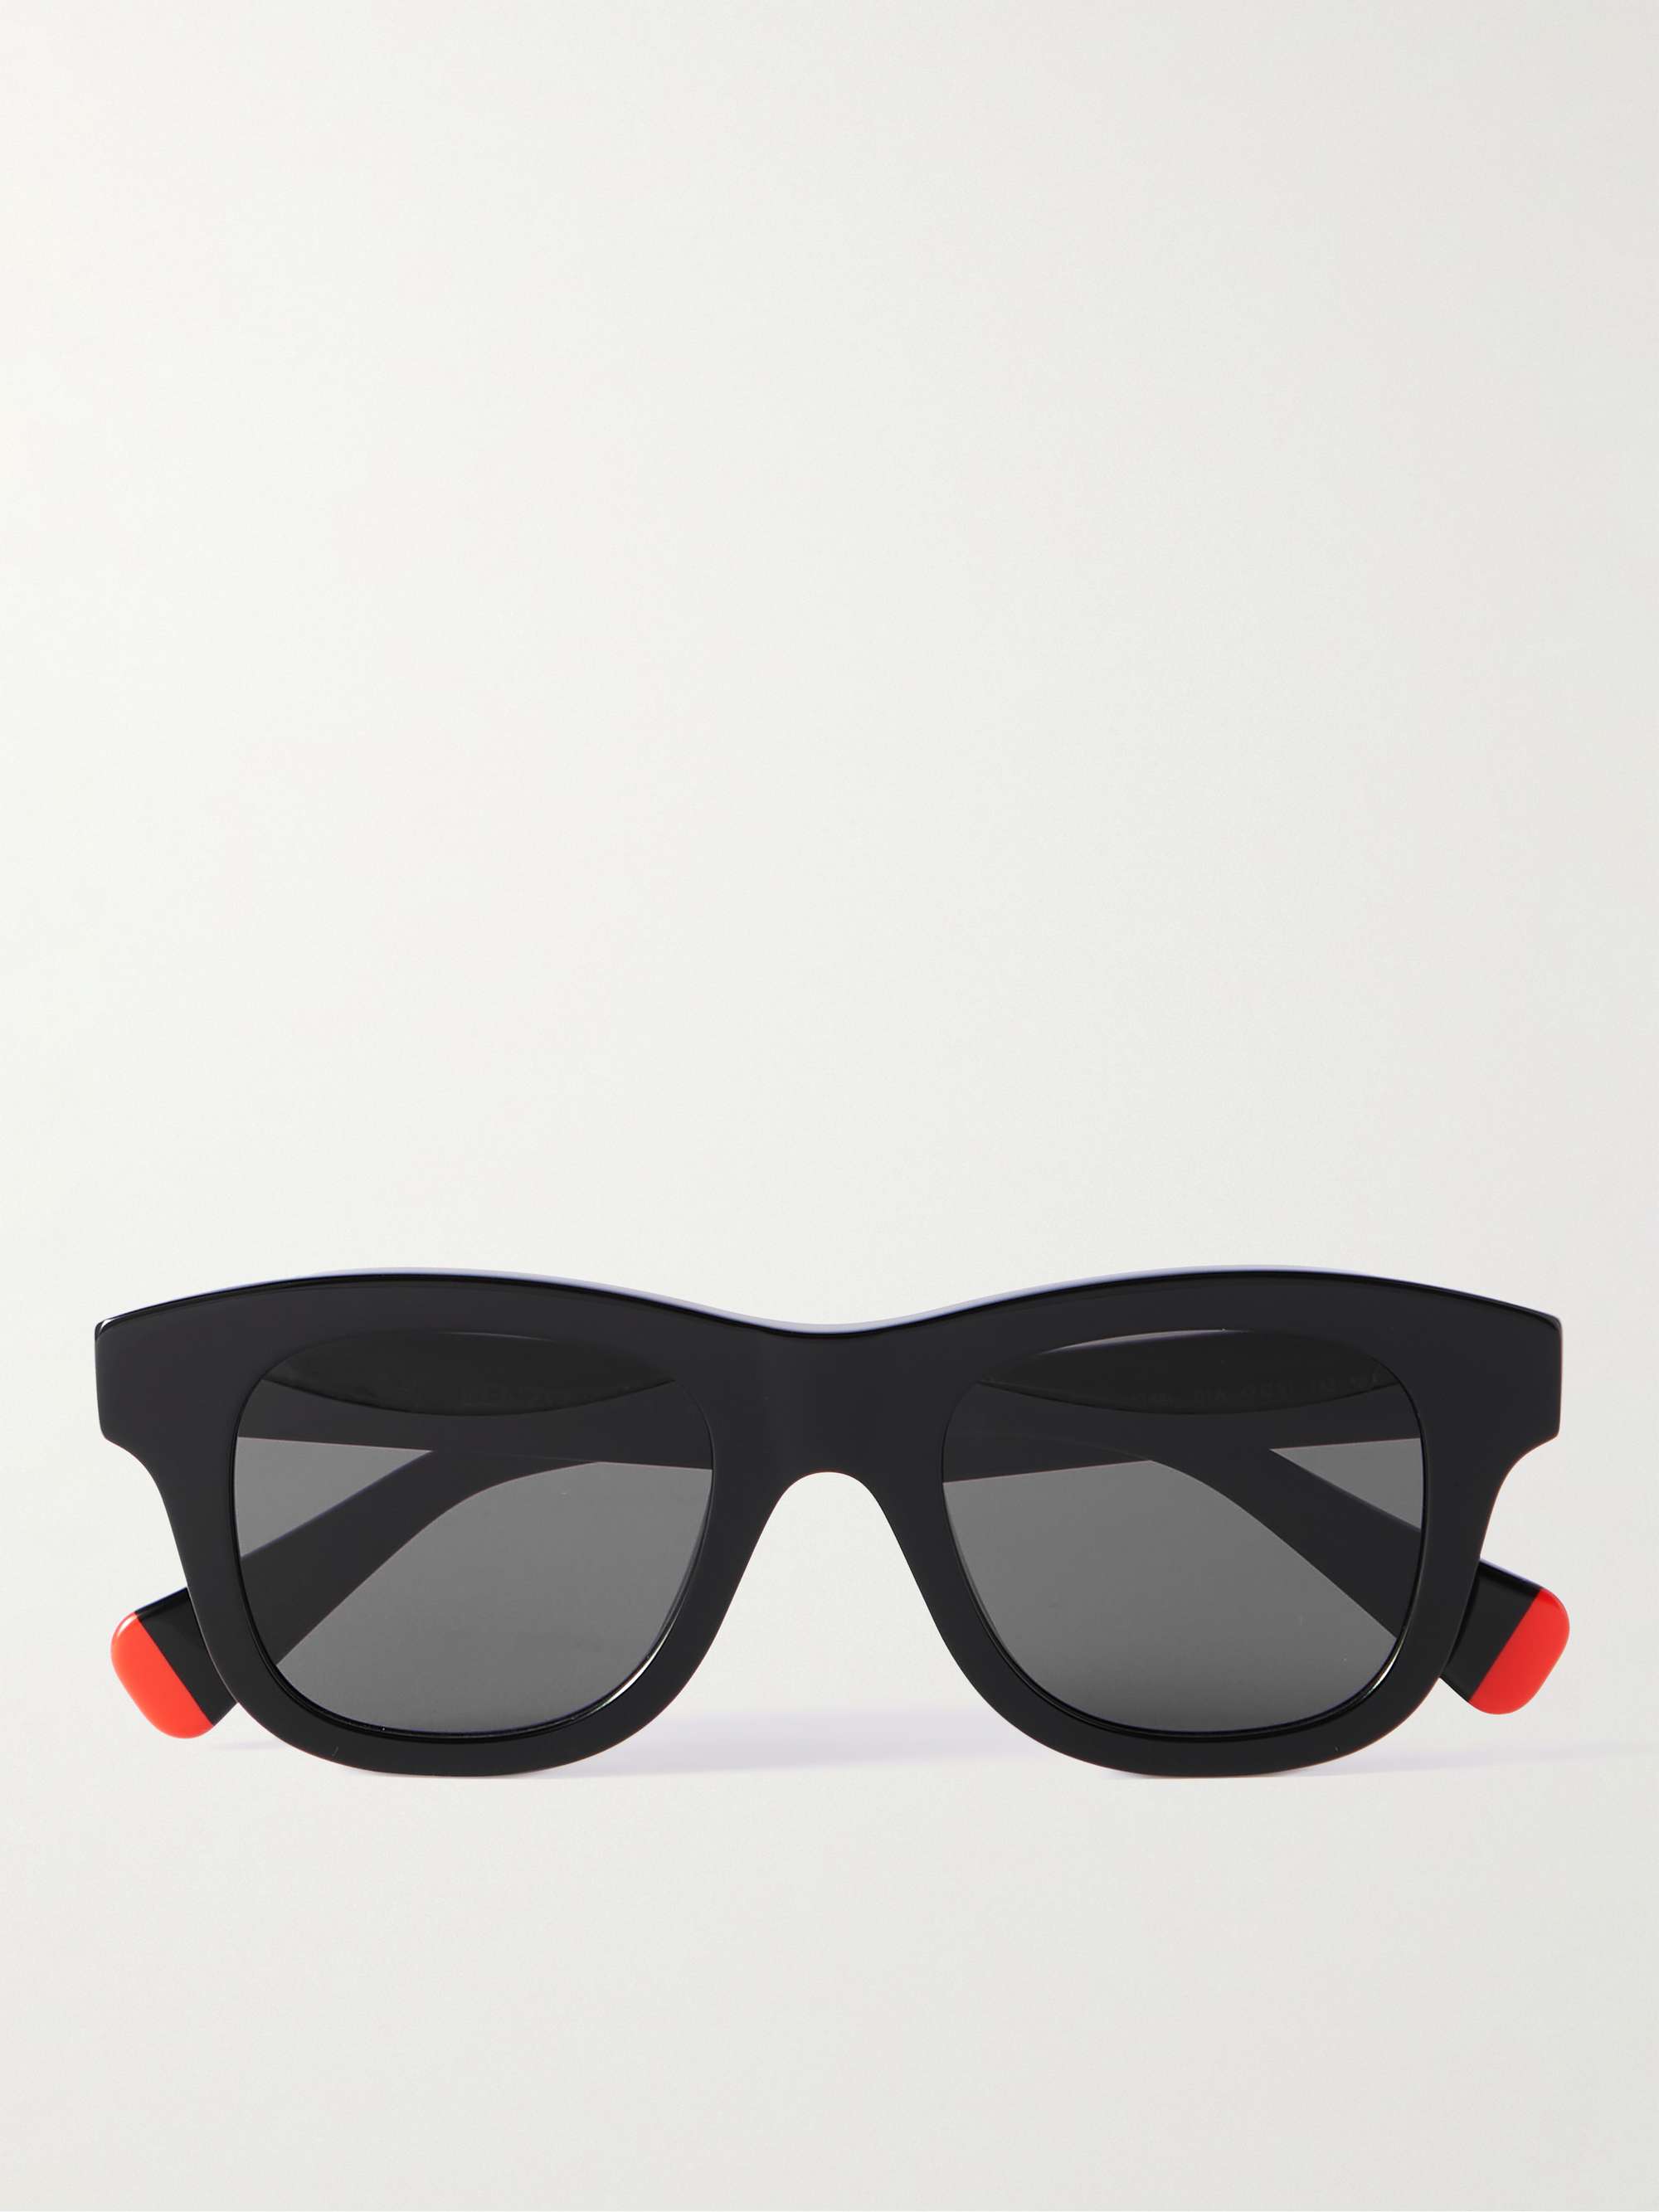 Aka Sonnenbrille mit D-Rahmen aus Azetat | MR PORTER